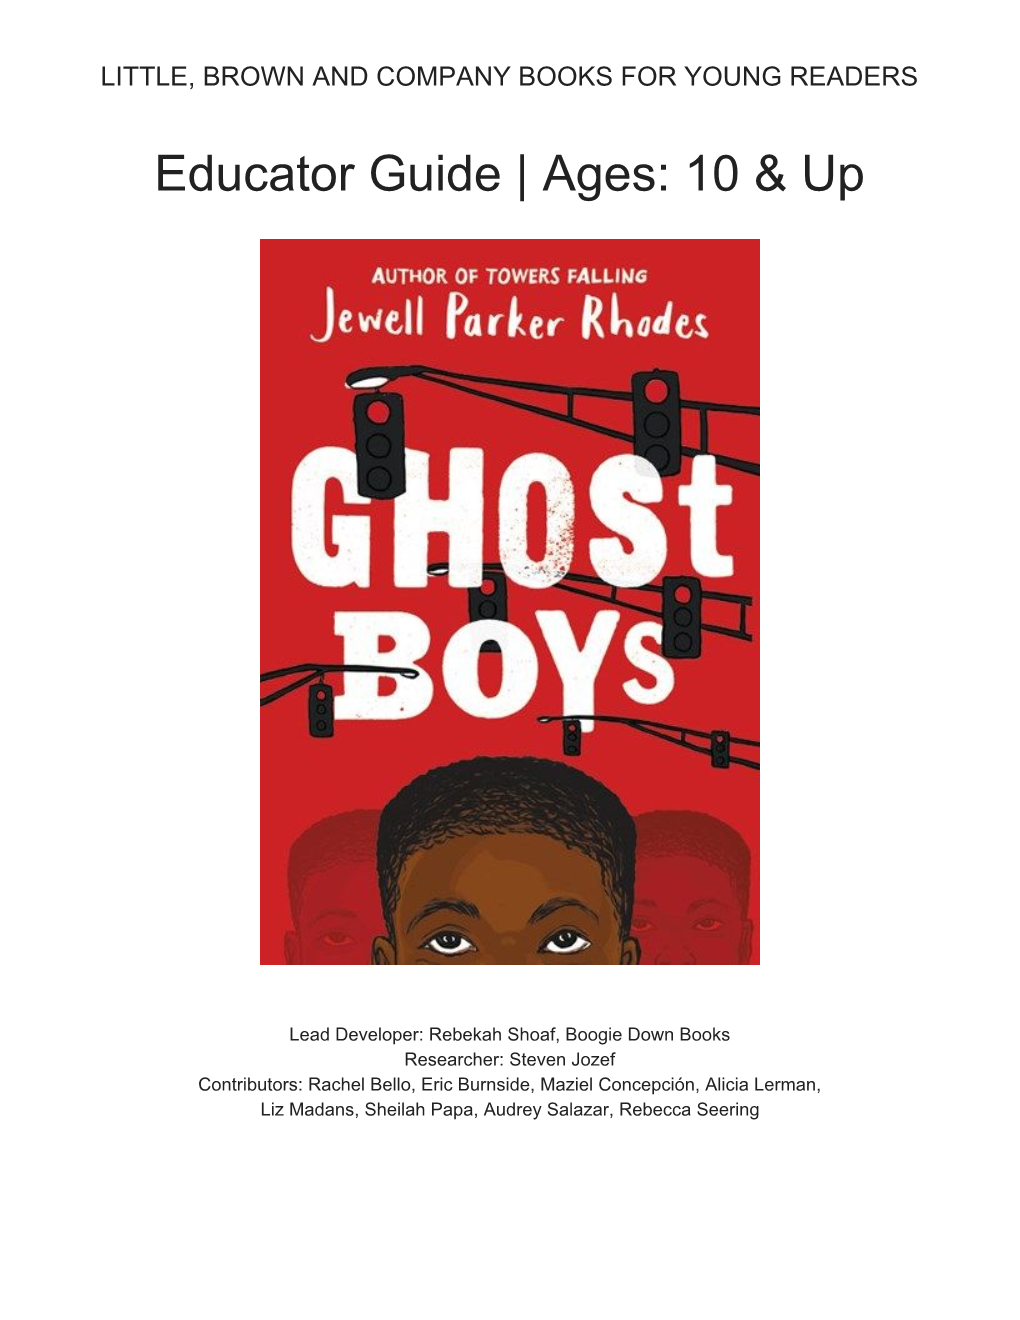 Ghost Boys Educator's Guide